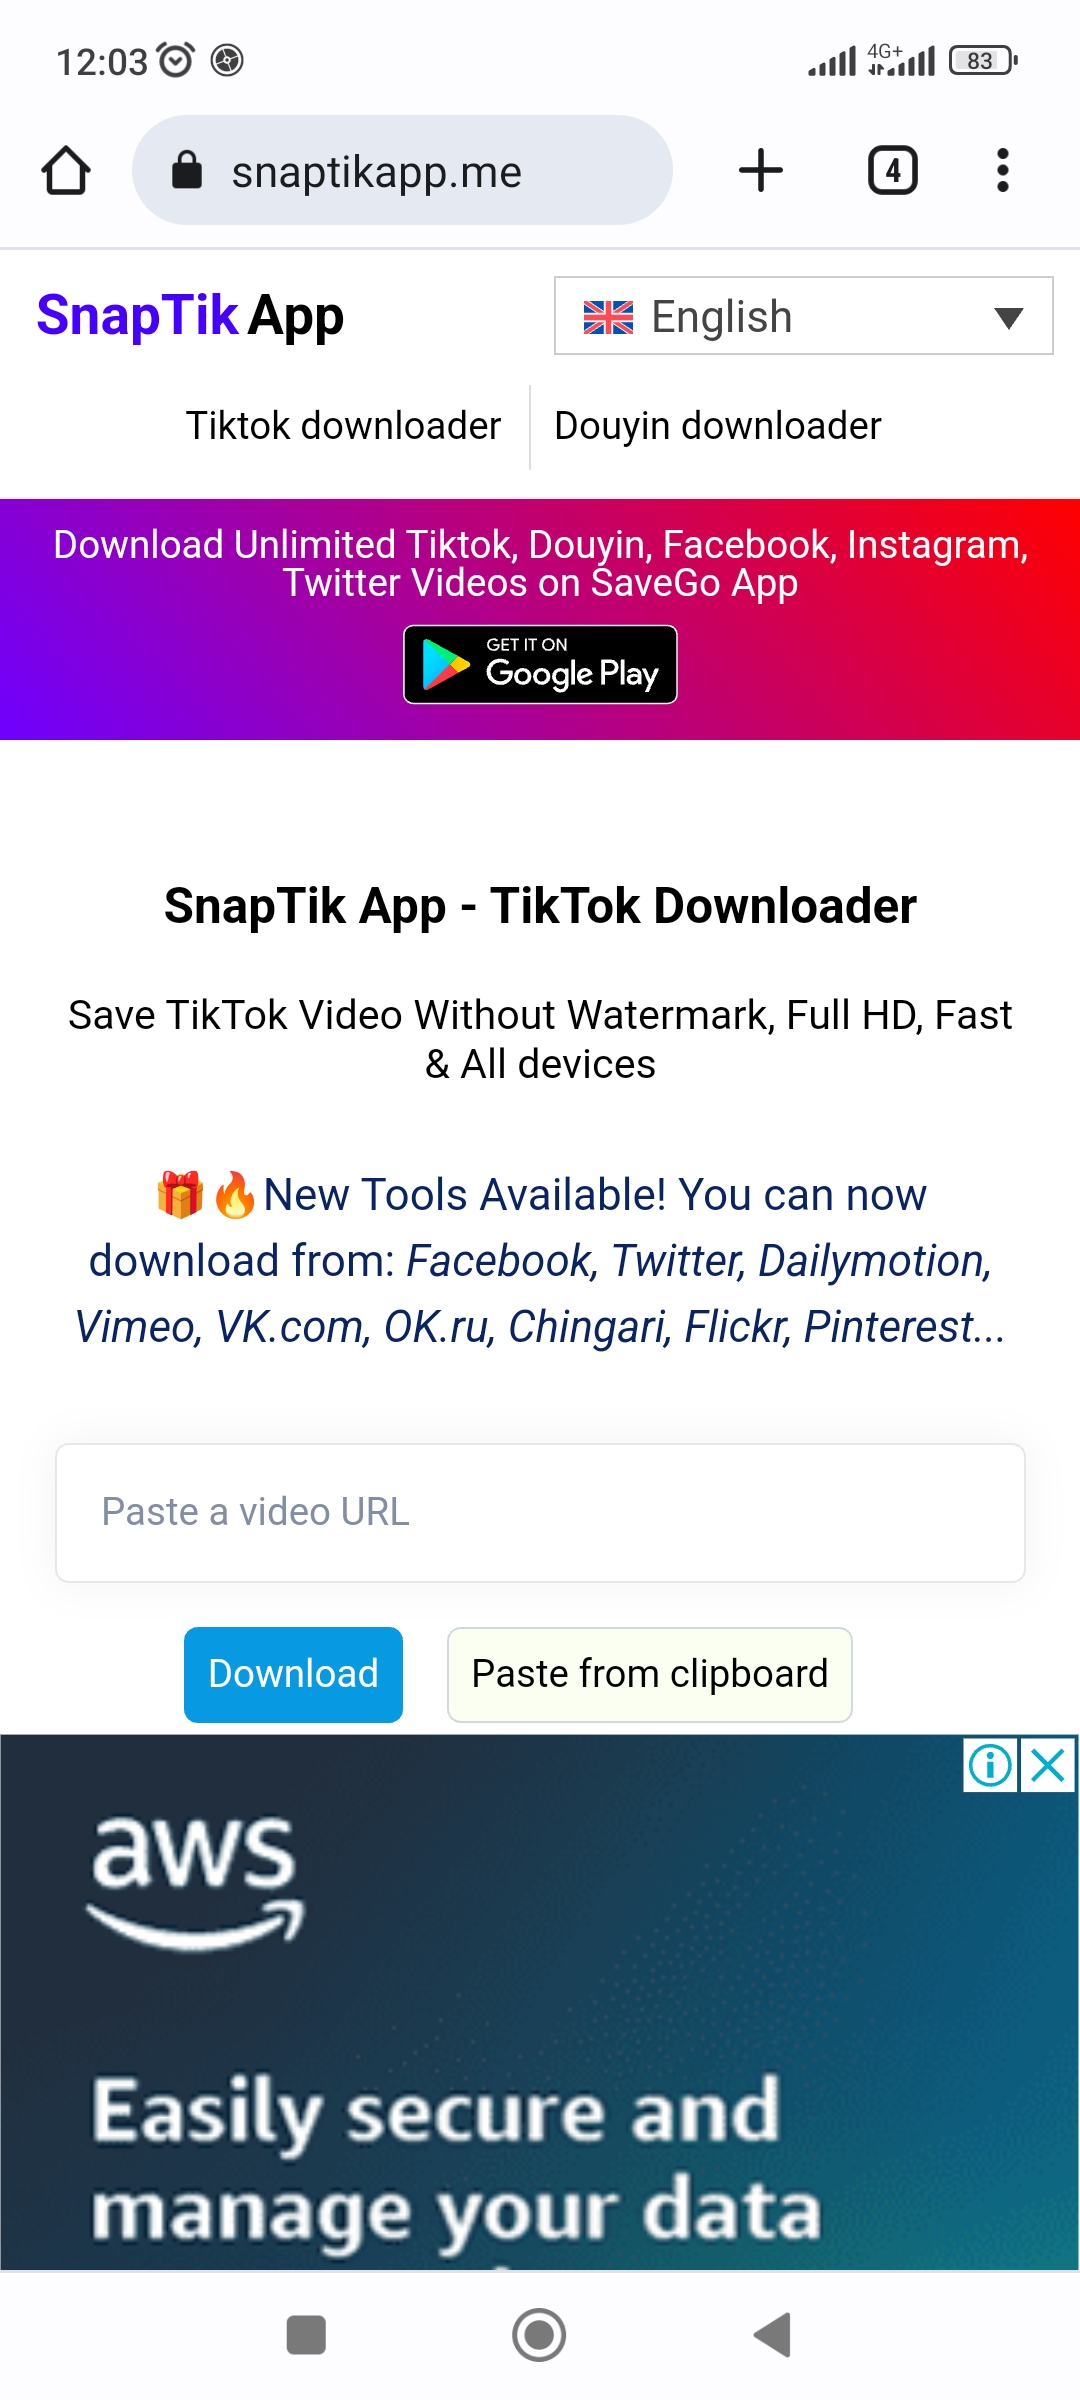 Truy cập vào SnapTik App tại website snaptikapp.me